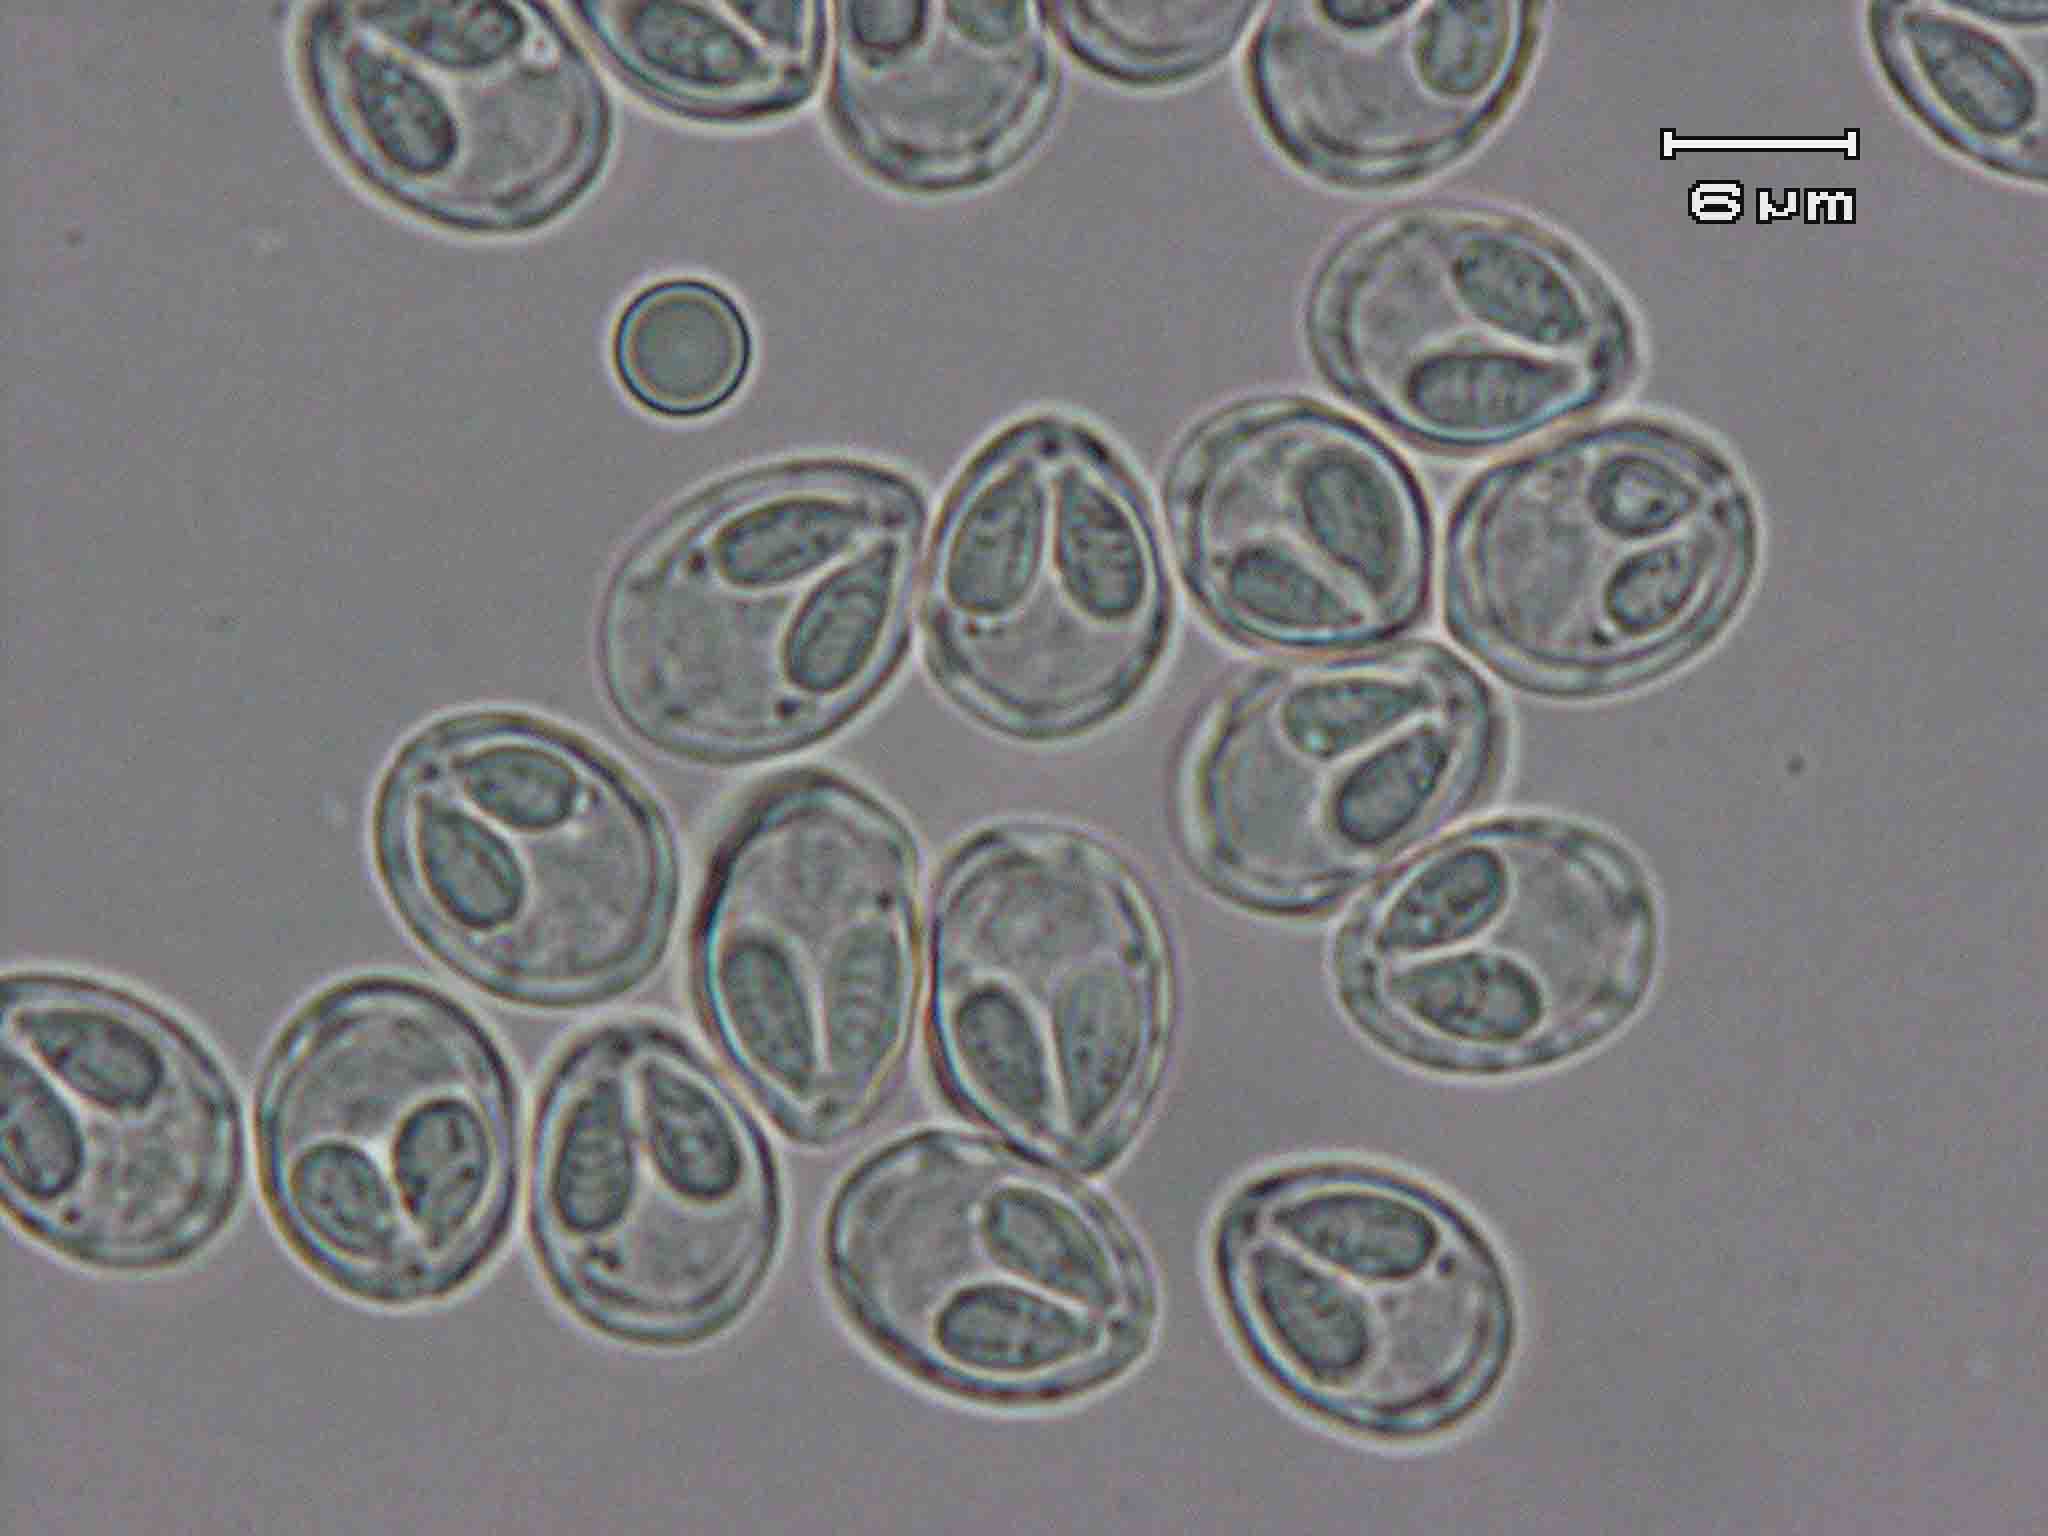 Myxobolus nagaraensis della classe dei Myxozoa